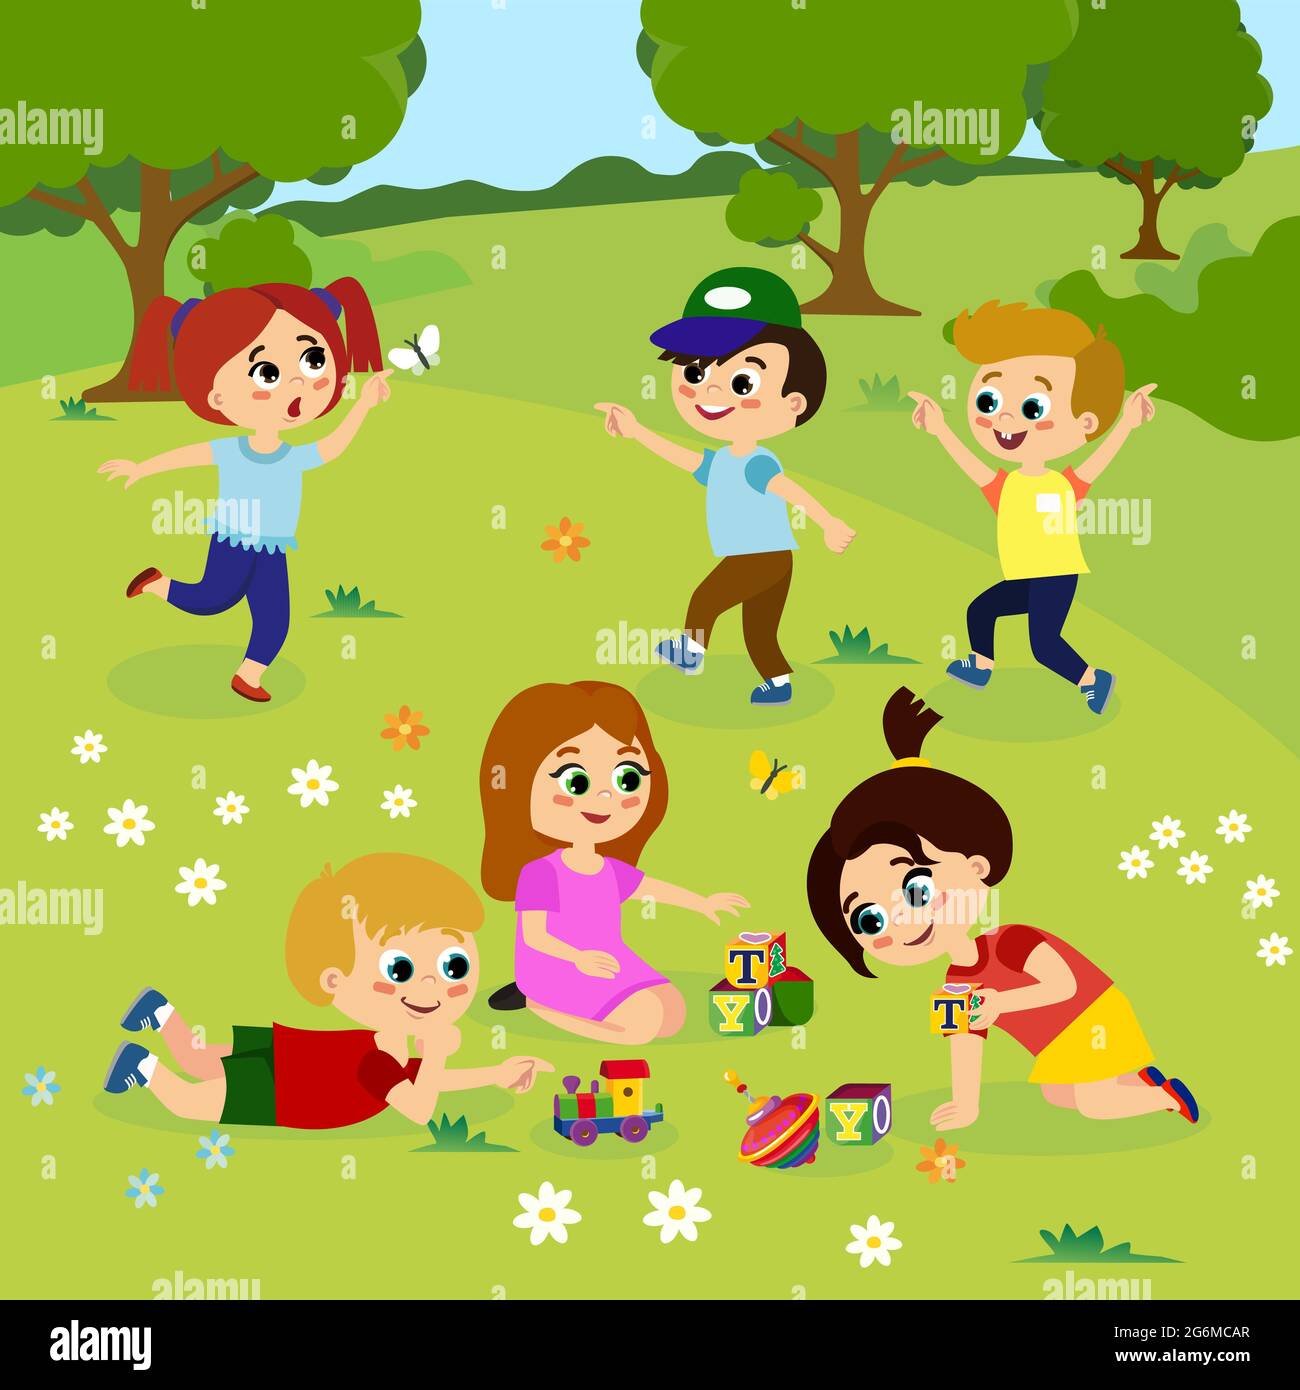 Children Playing Tag Game Vector Cartoon Art Stock Illustration